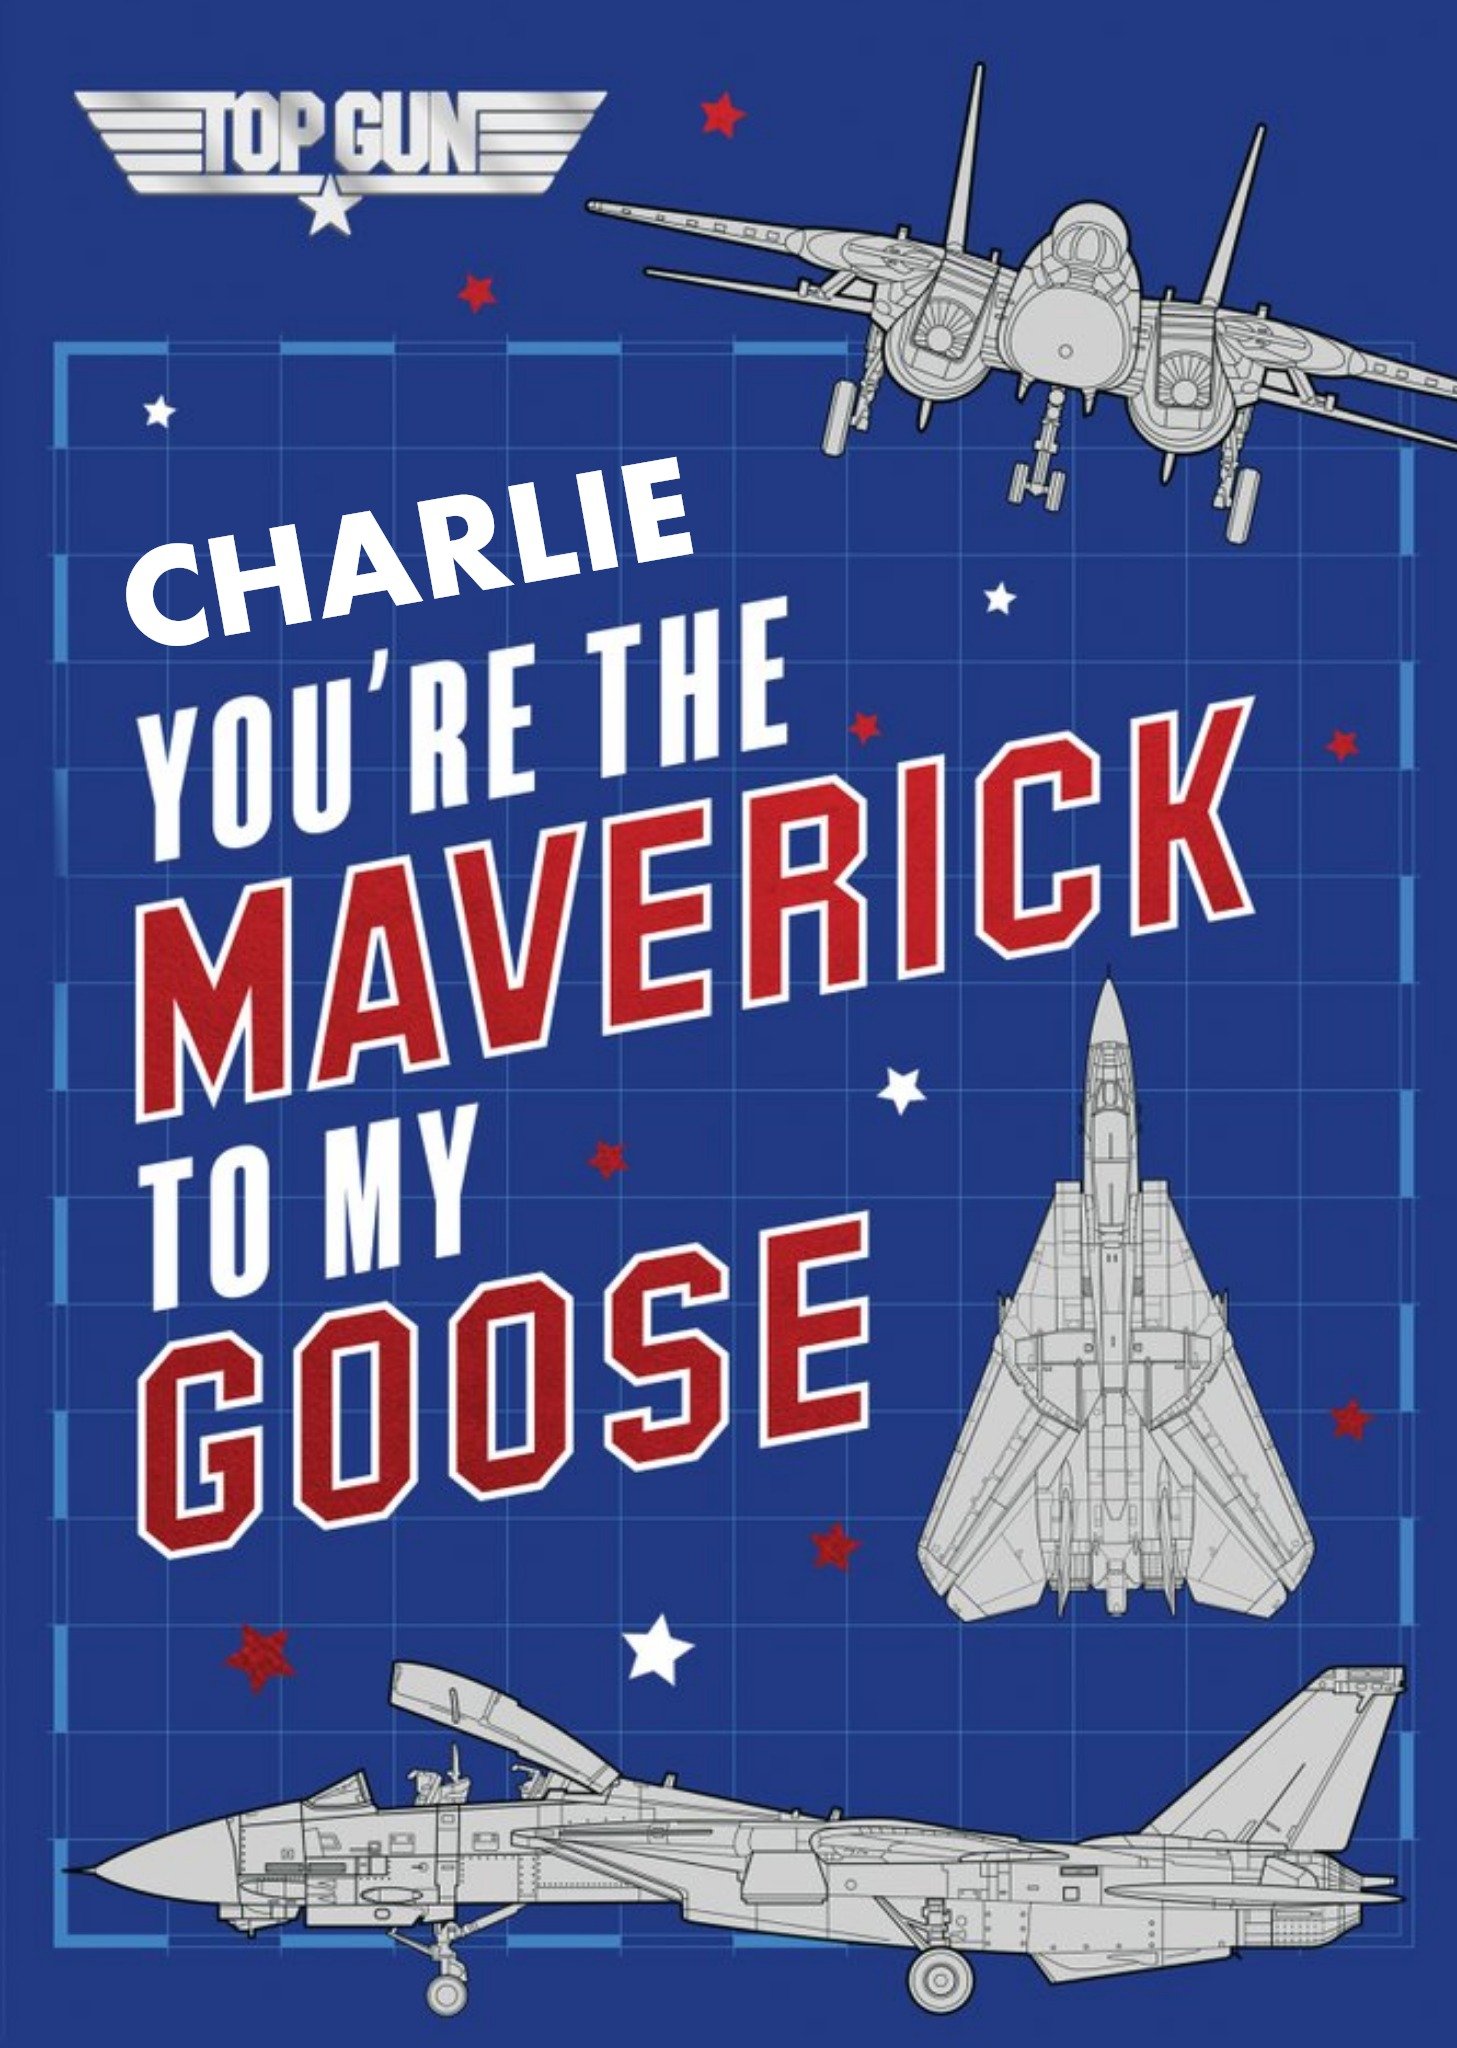 Other Top Gun You're The Maverick To My Goose Birthday Card Ecard